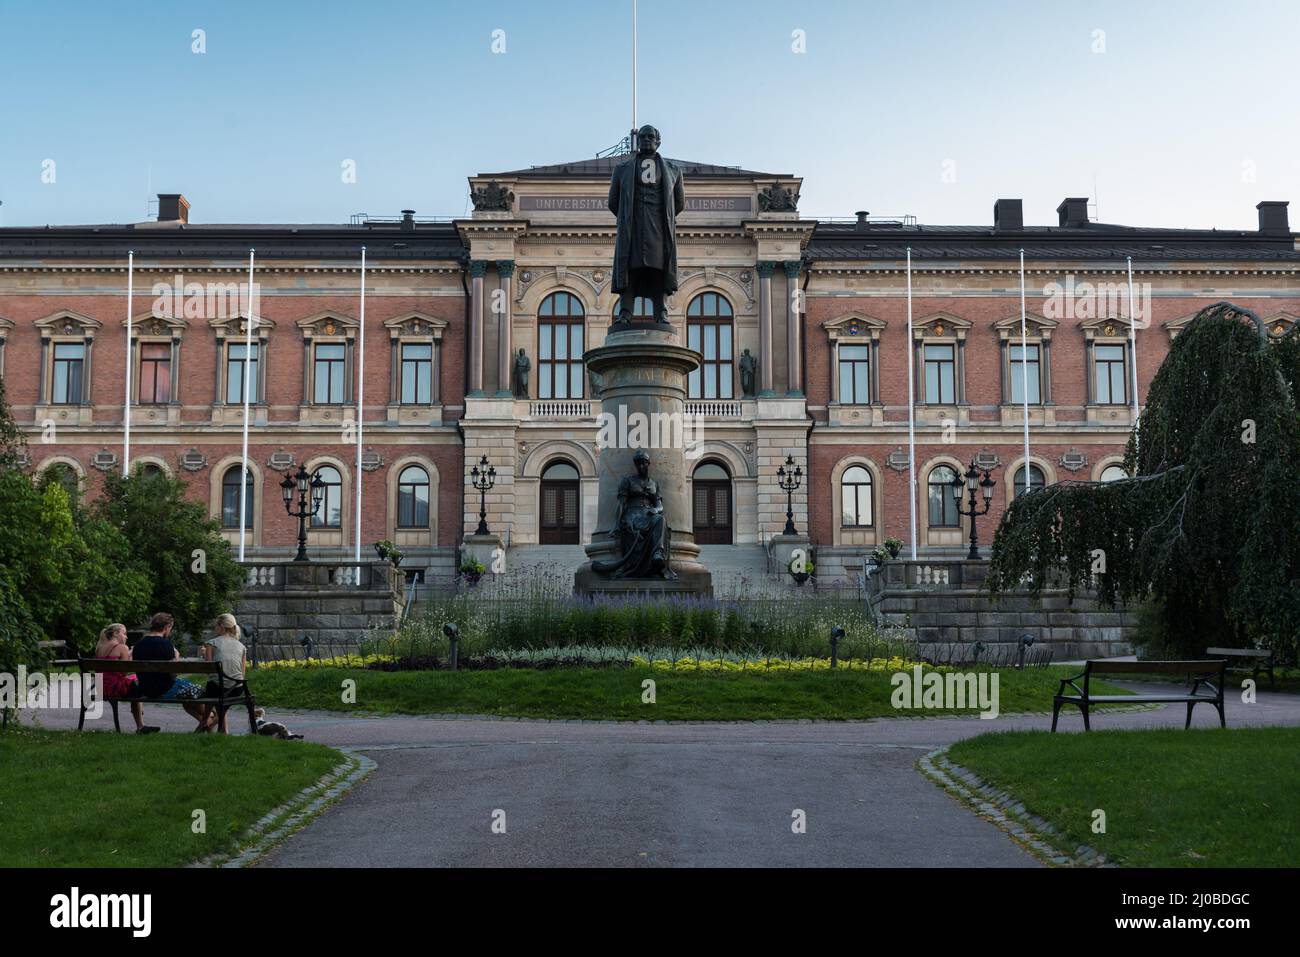 Uppsala, Uppland -Sweden - 07 27 2019 Facade and statue of the university of Uppsala Stock Photo